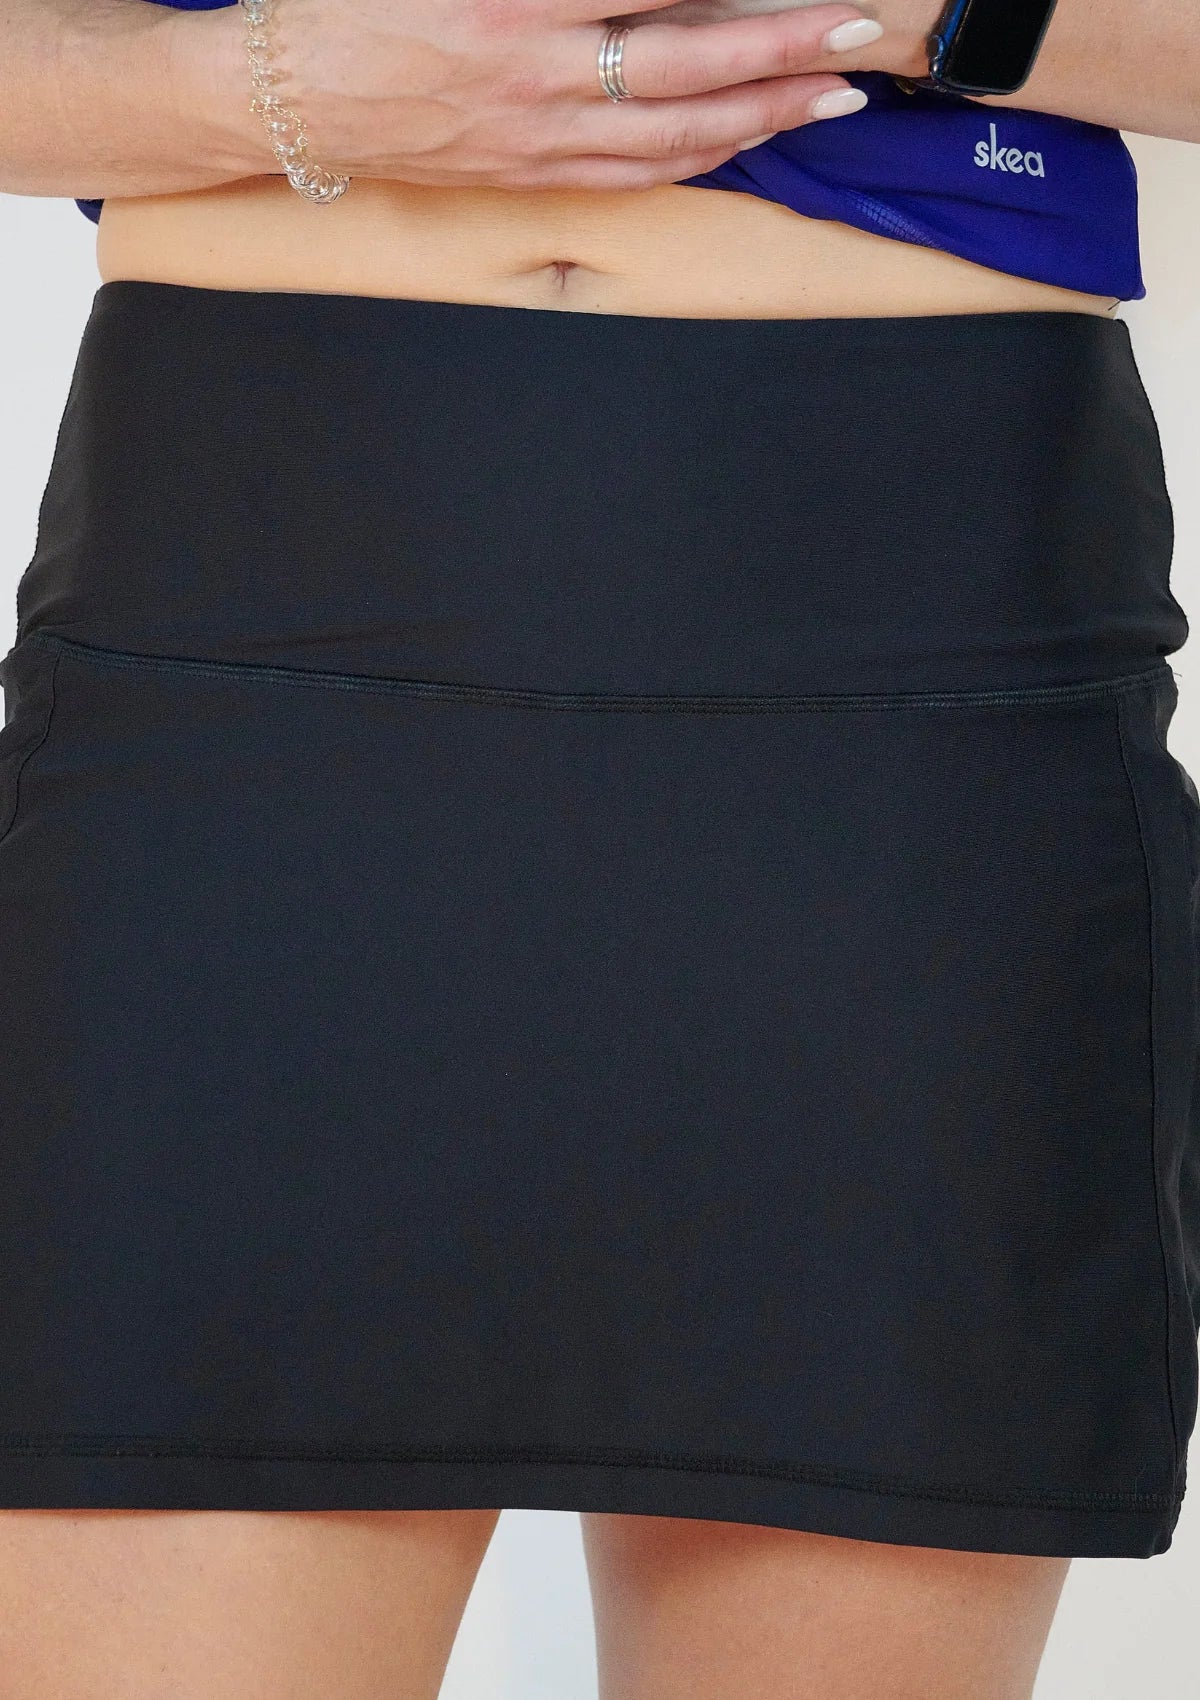 HIghwaisted Skea skort raised to show woman's bellybutton